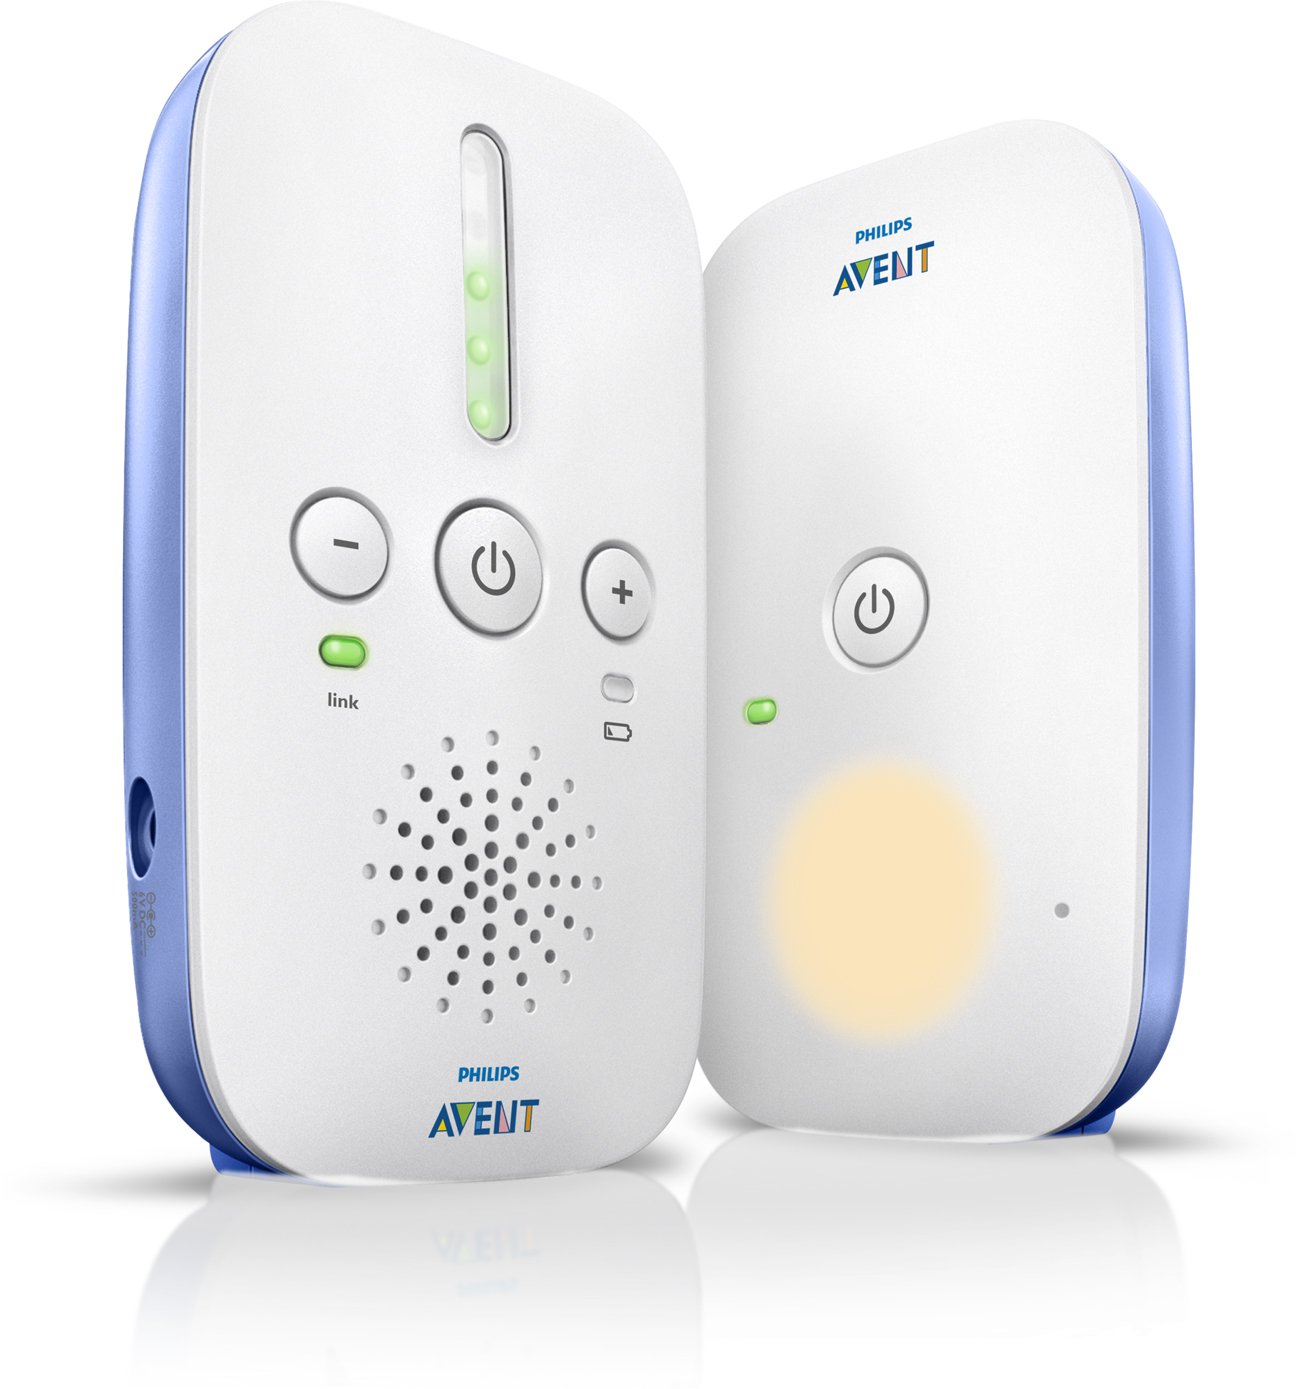 Philips Avant Zero Interference LED Baby Monitor